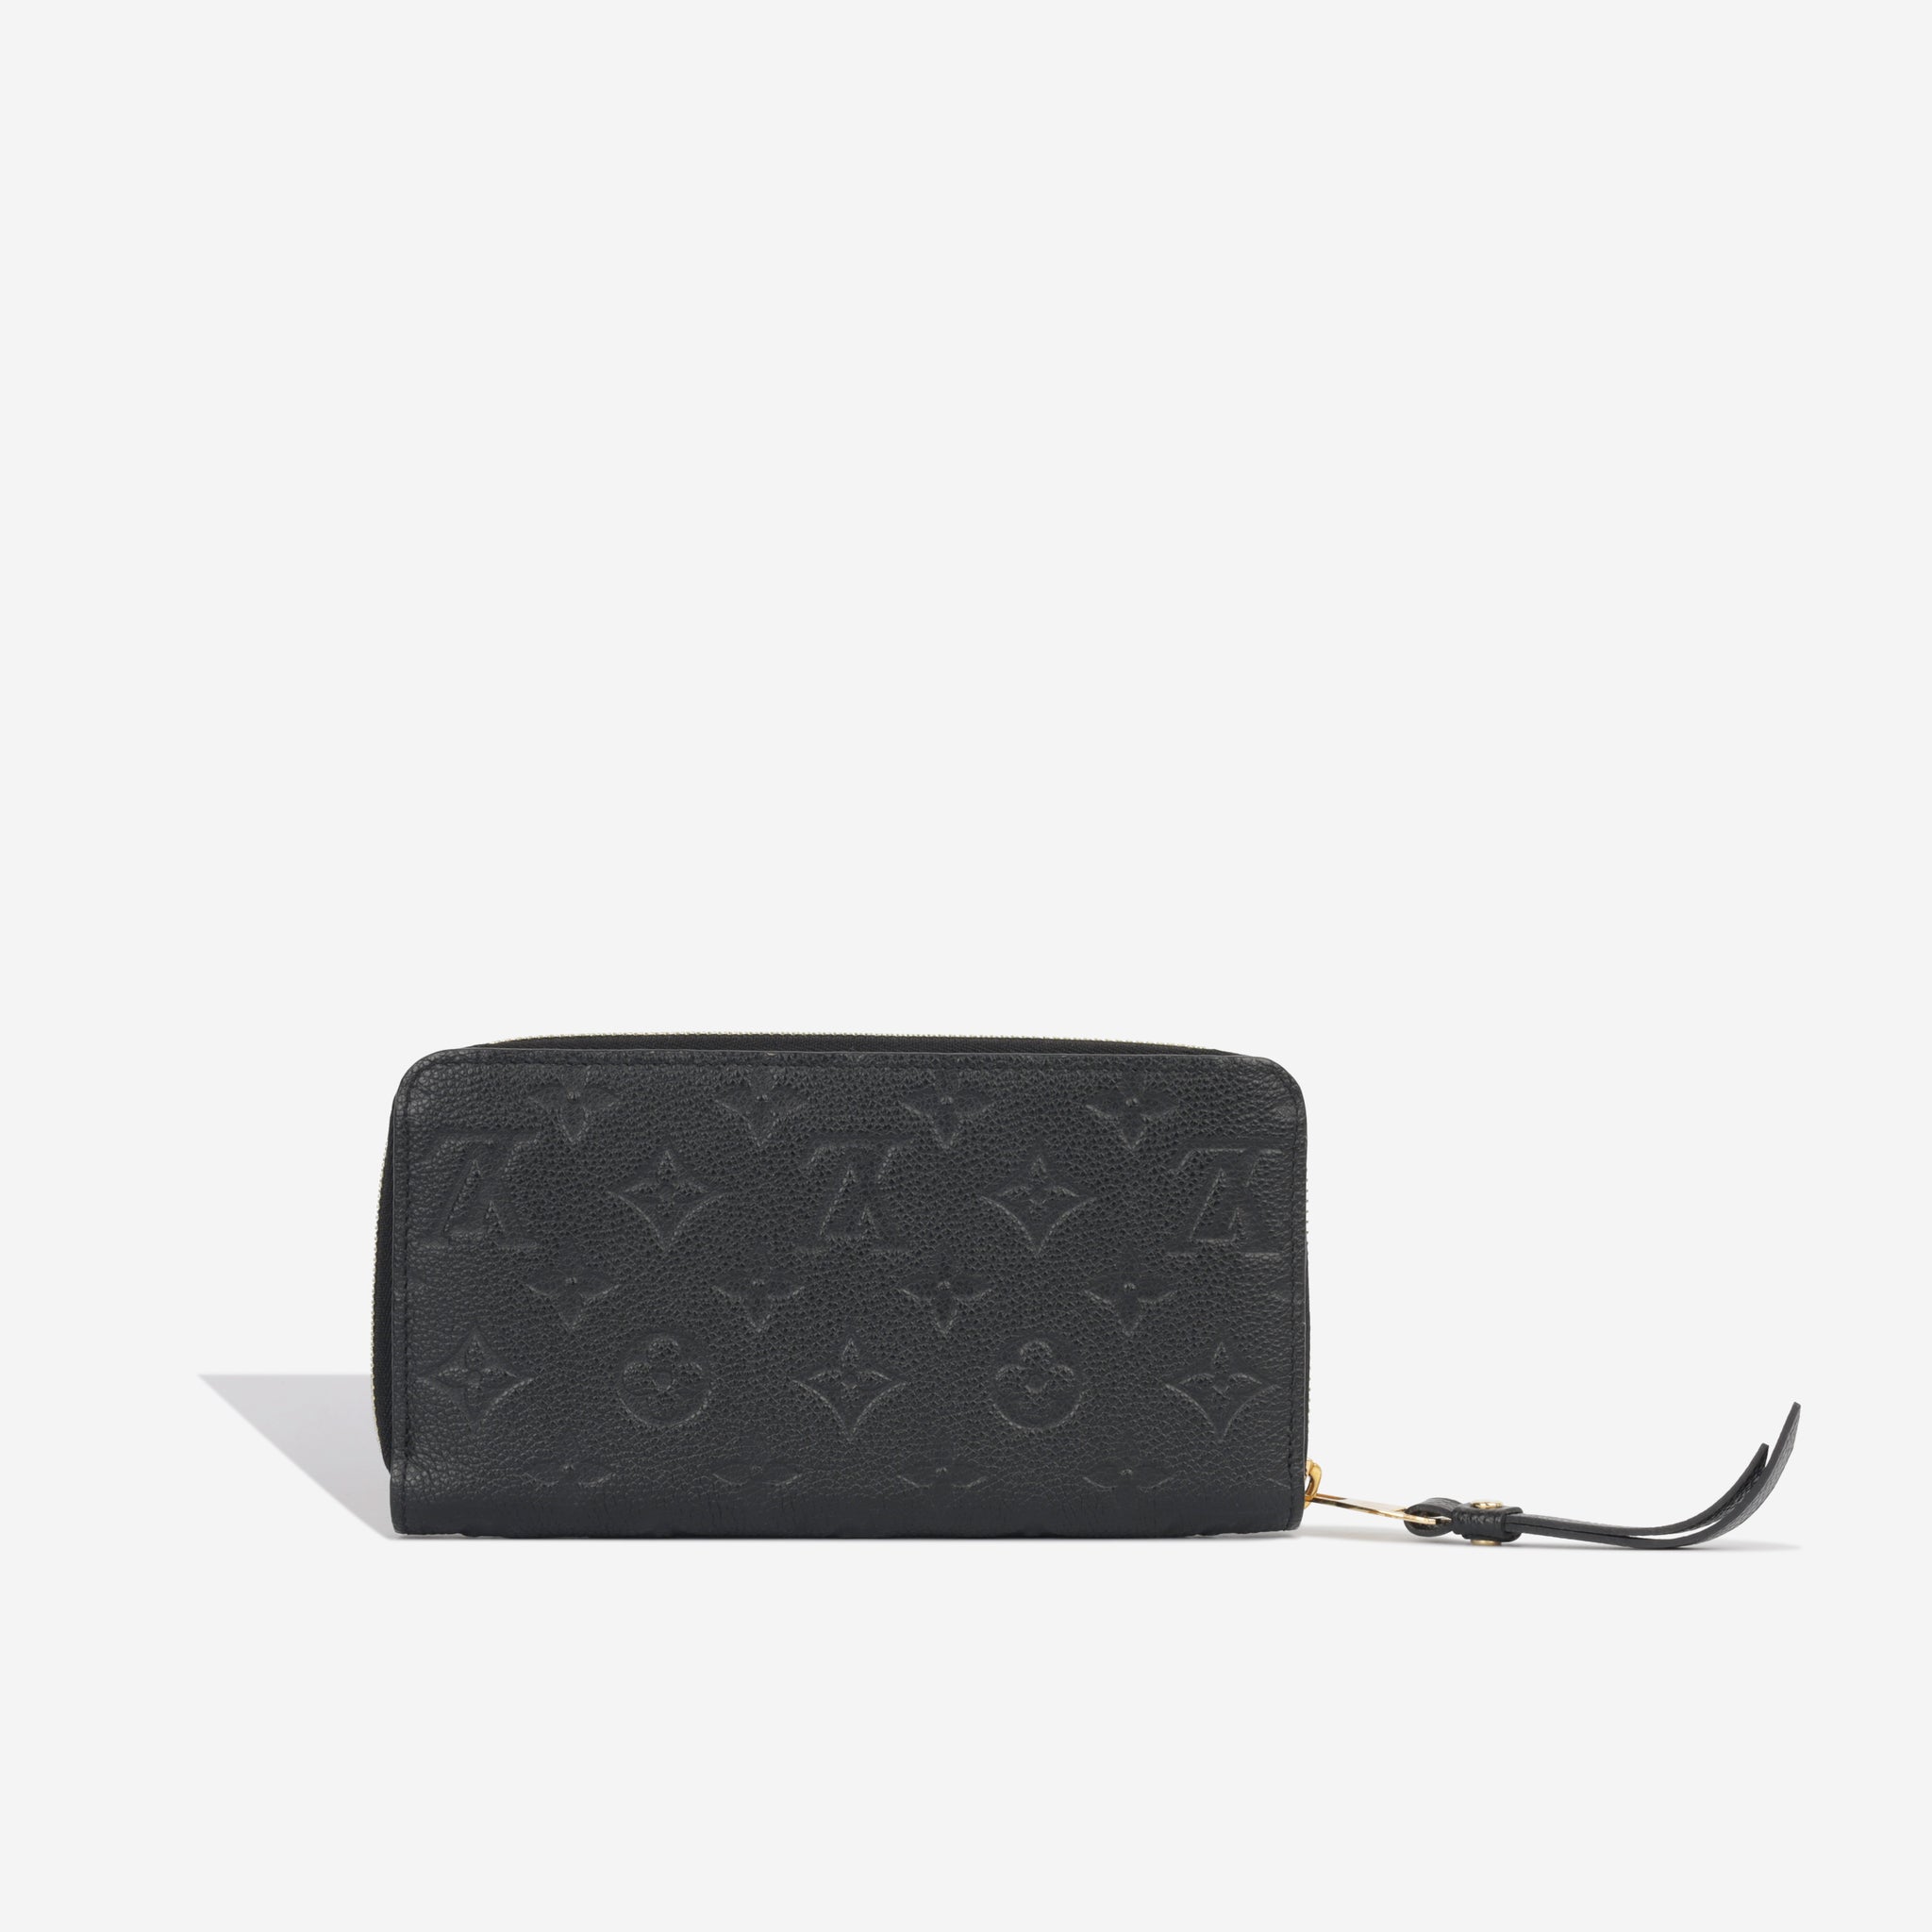 Louis Vuitton - Zippy Wallet - Black Empreinte - GHW - Excellent